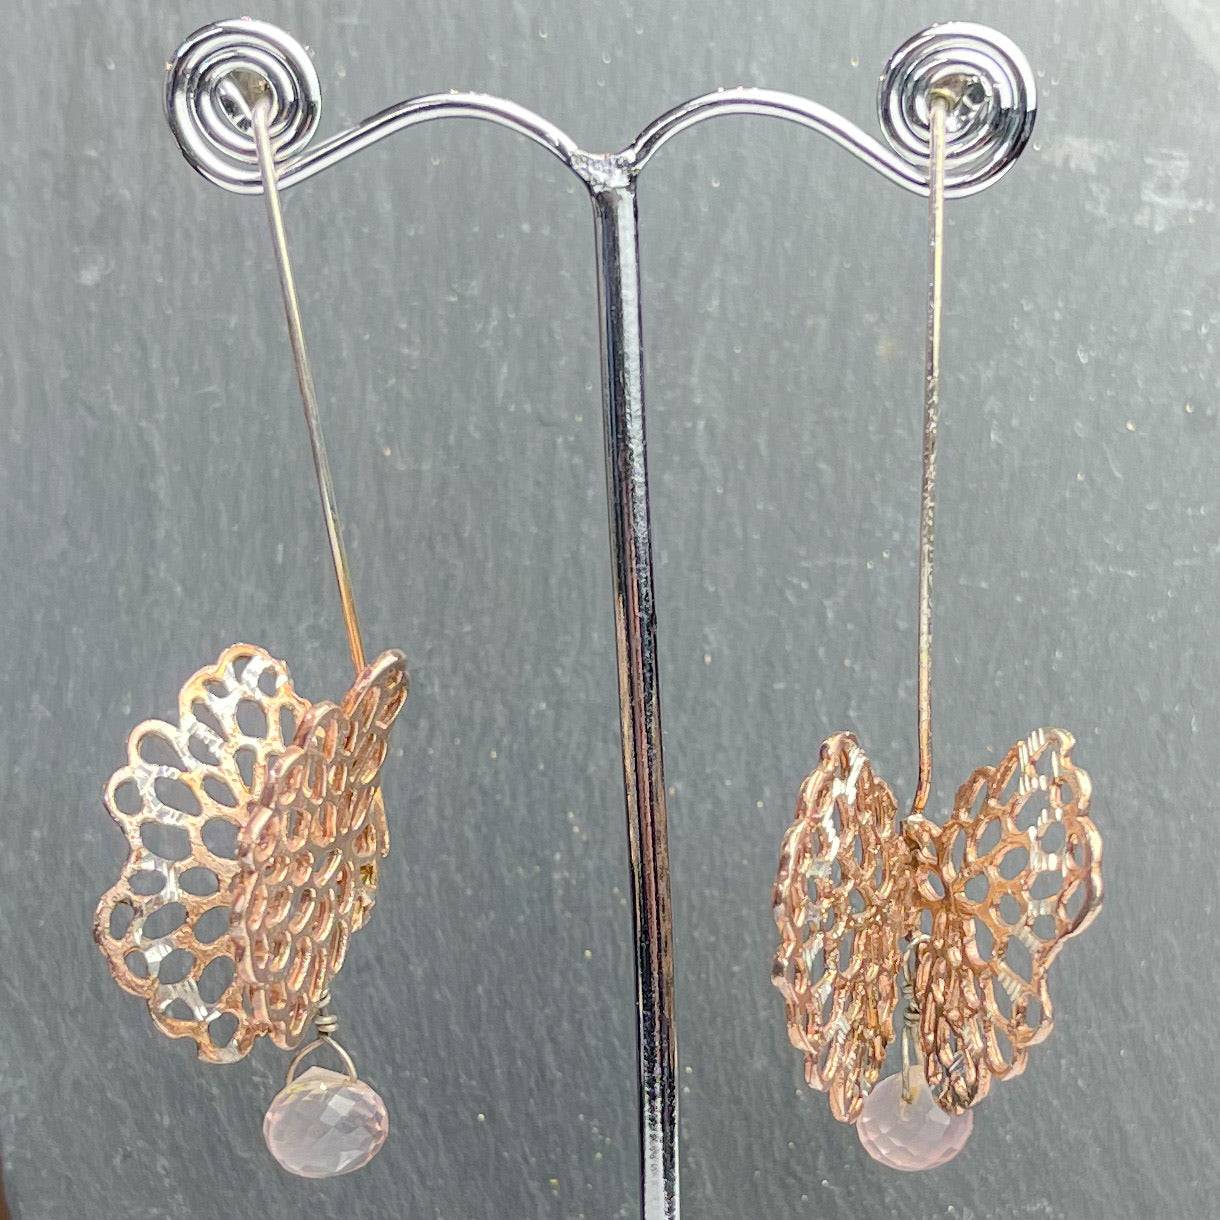 Rose Quartz Butterfly Earrings - The Nancy Smillie Shop - Art, Jewellery & Designer Gifts Glasgow